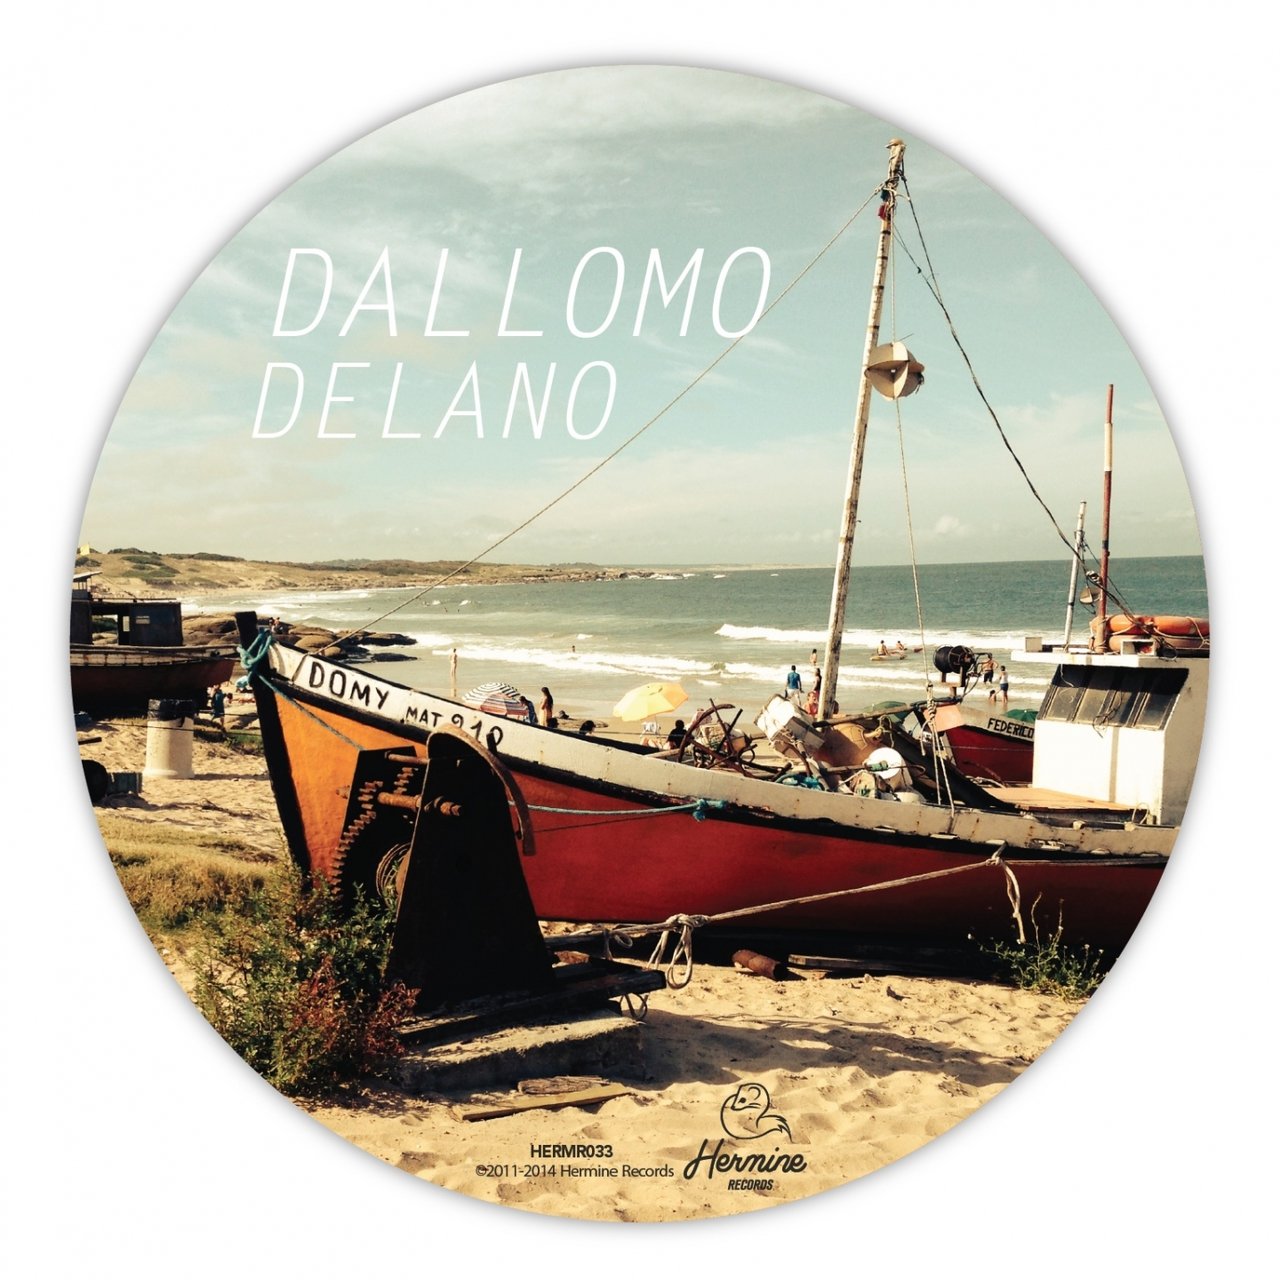 Dallomo - Delano (HERMR033)